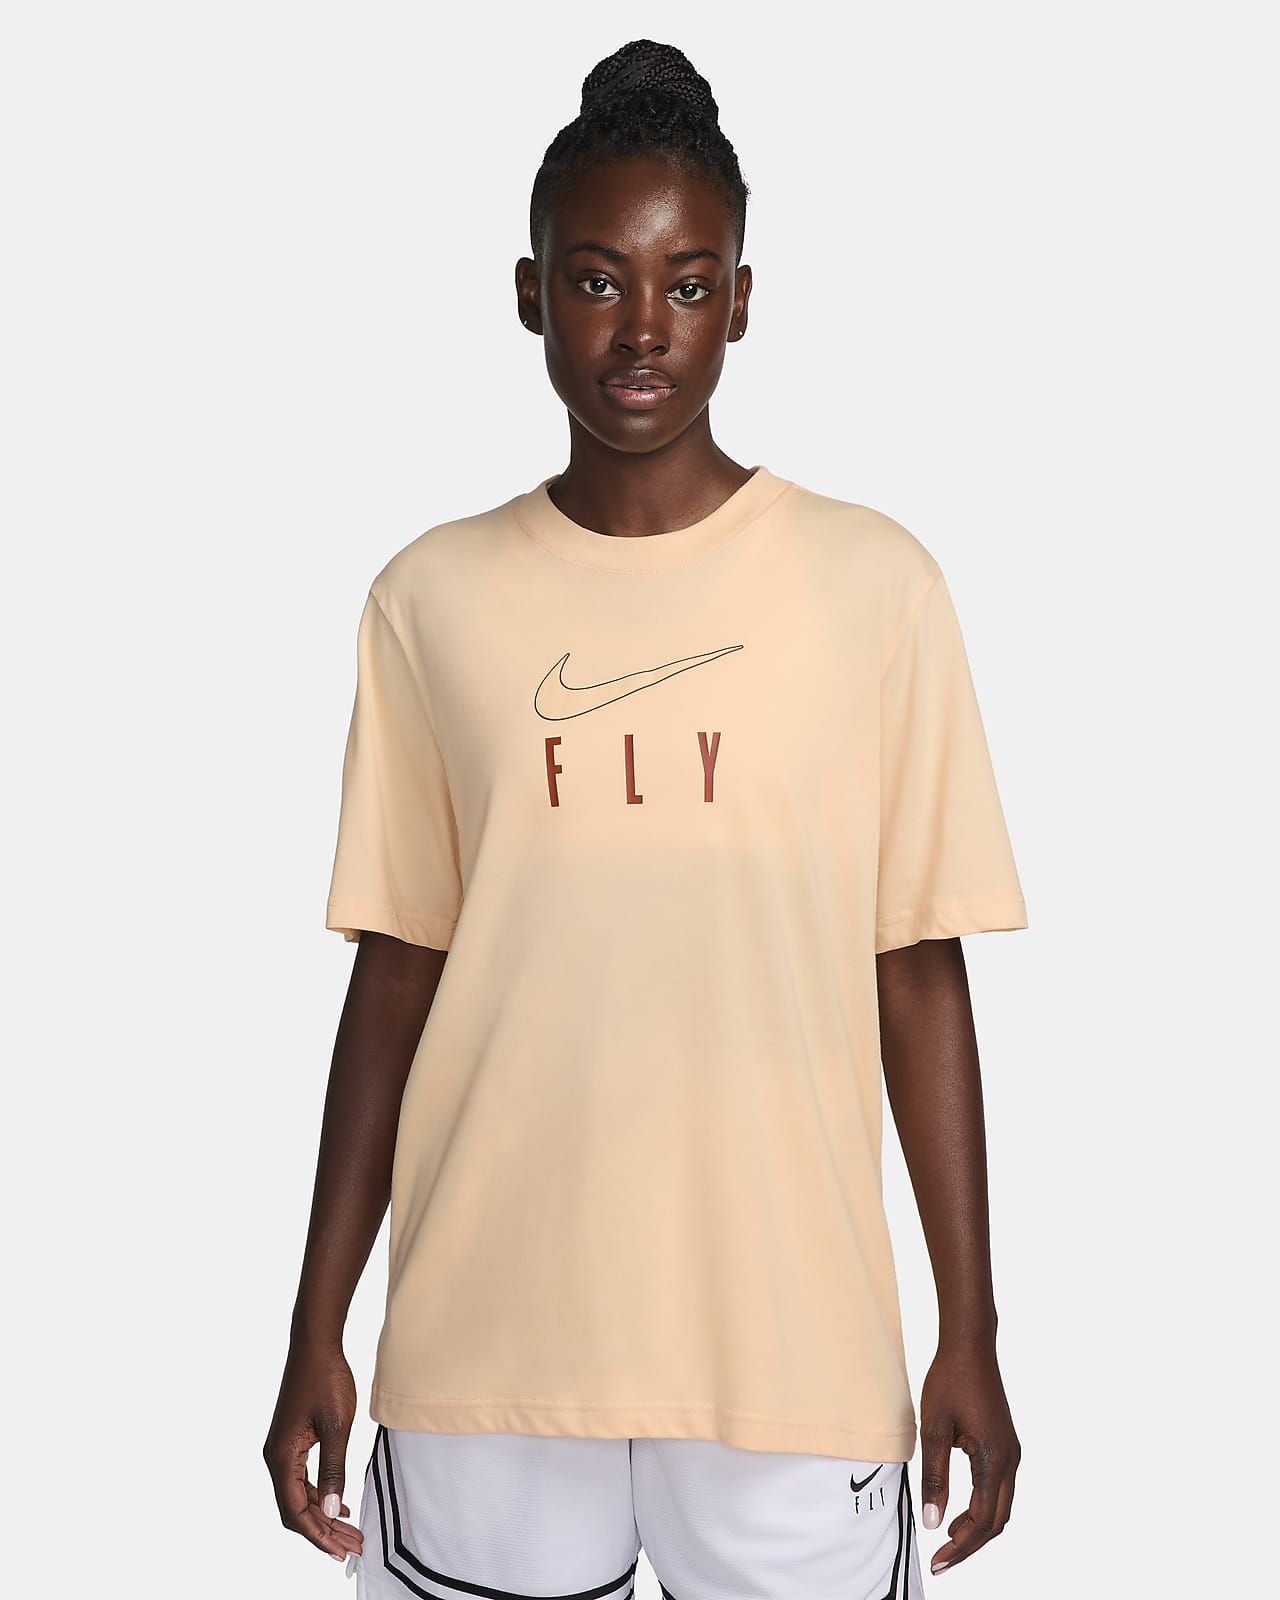 Nike Dri-FIT Swoosh Fly Women's T-Shirt. Nike NL